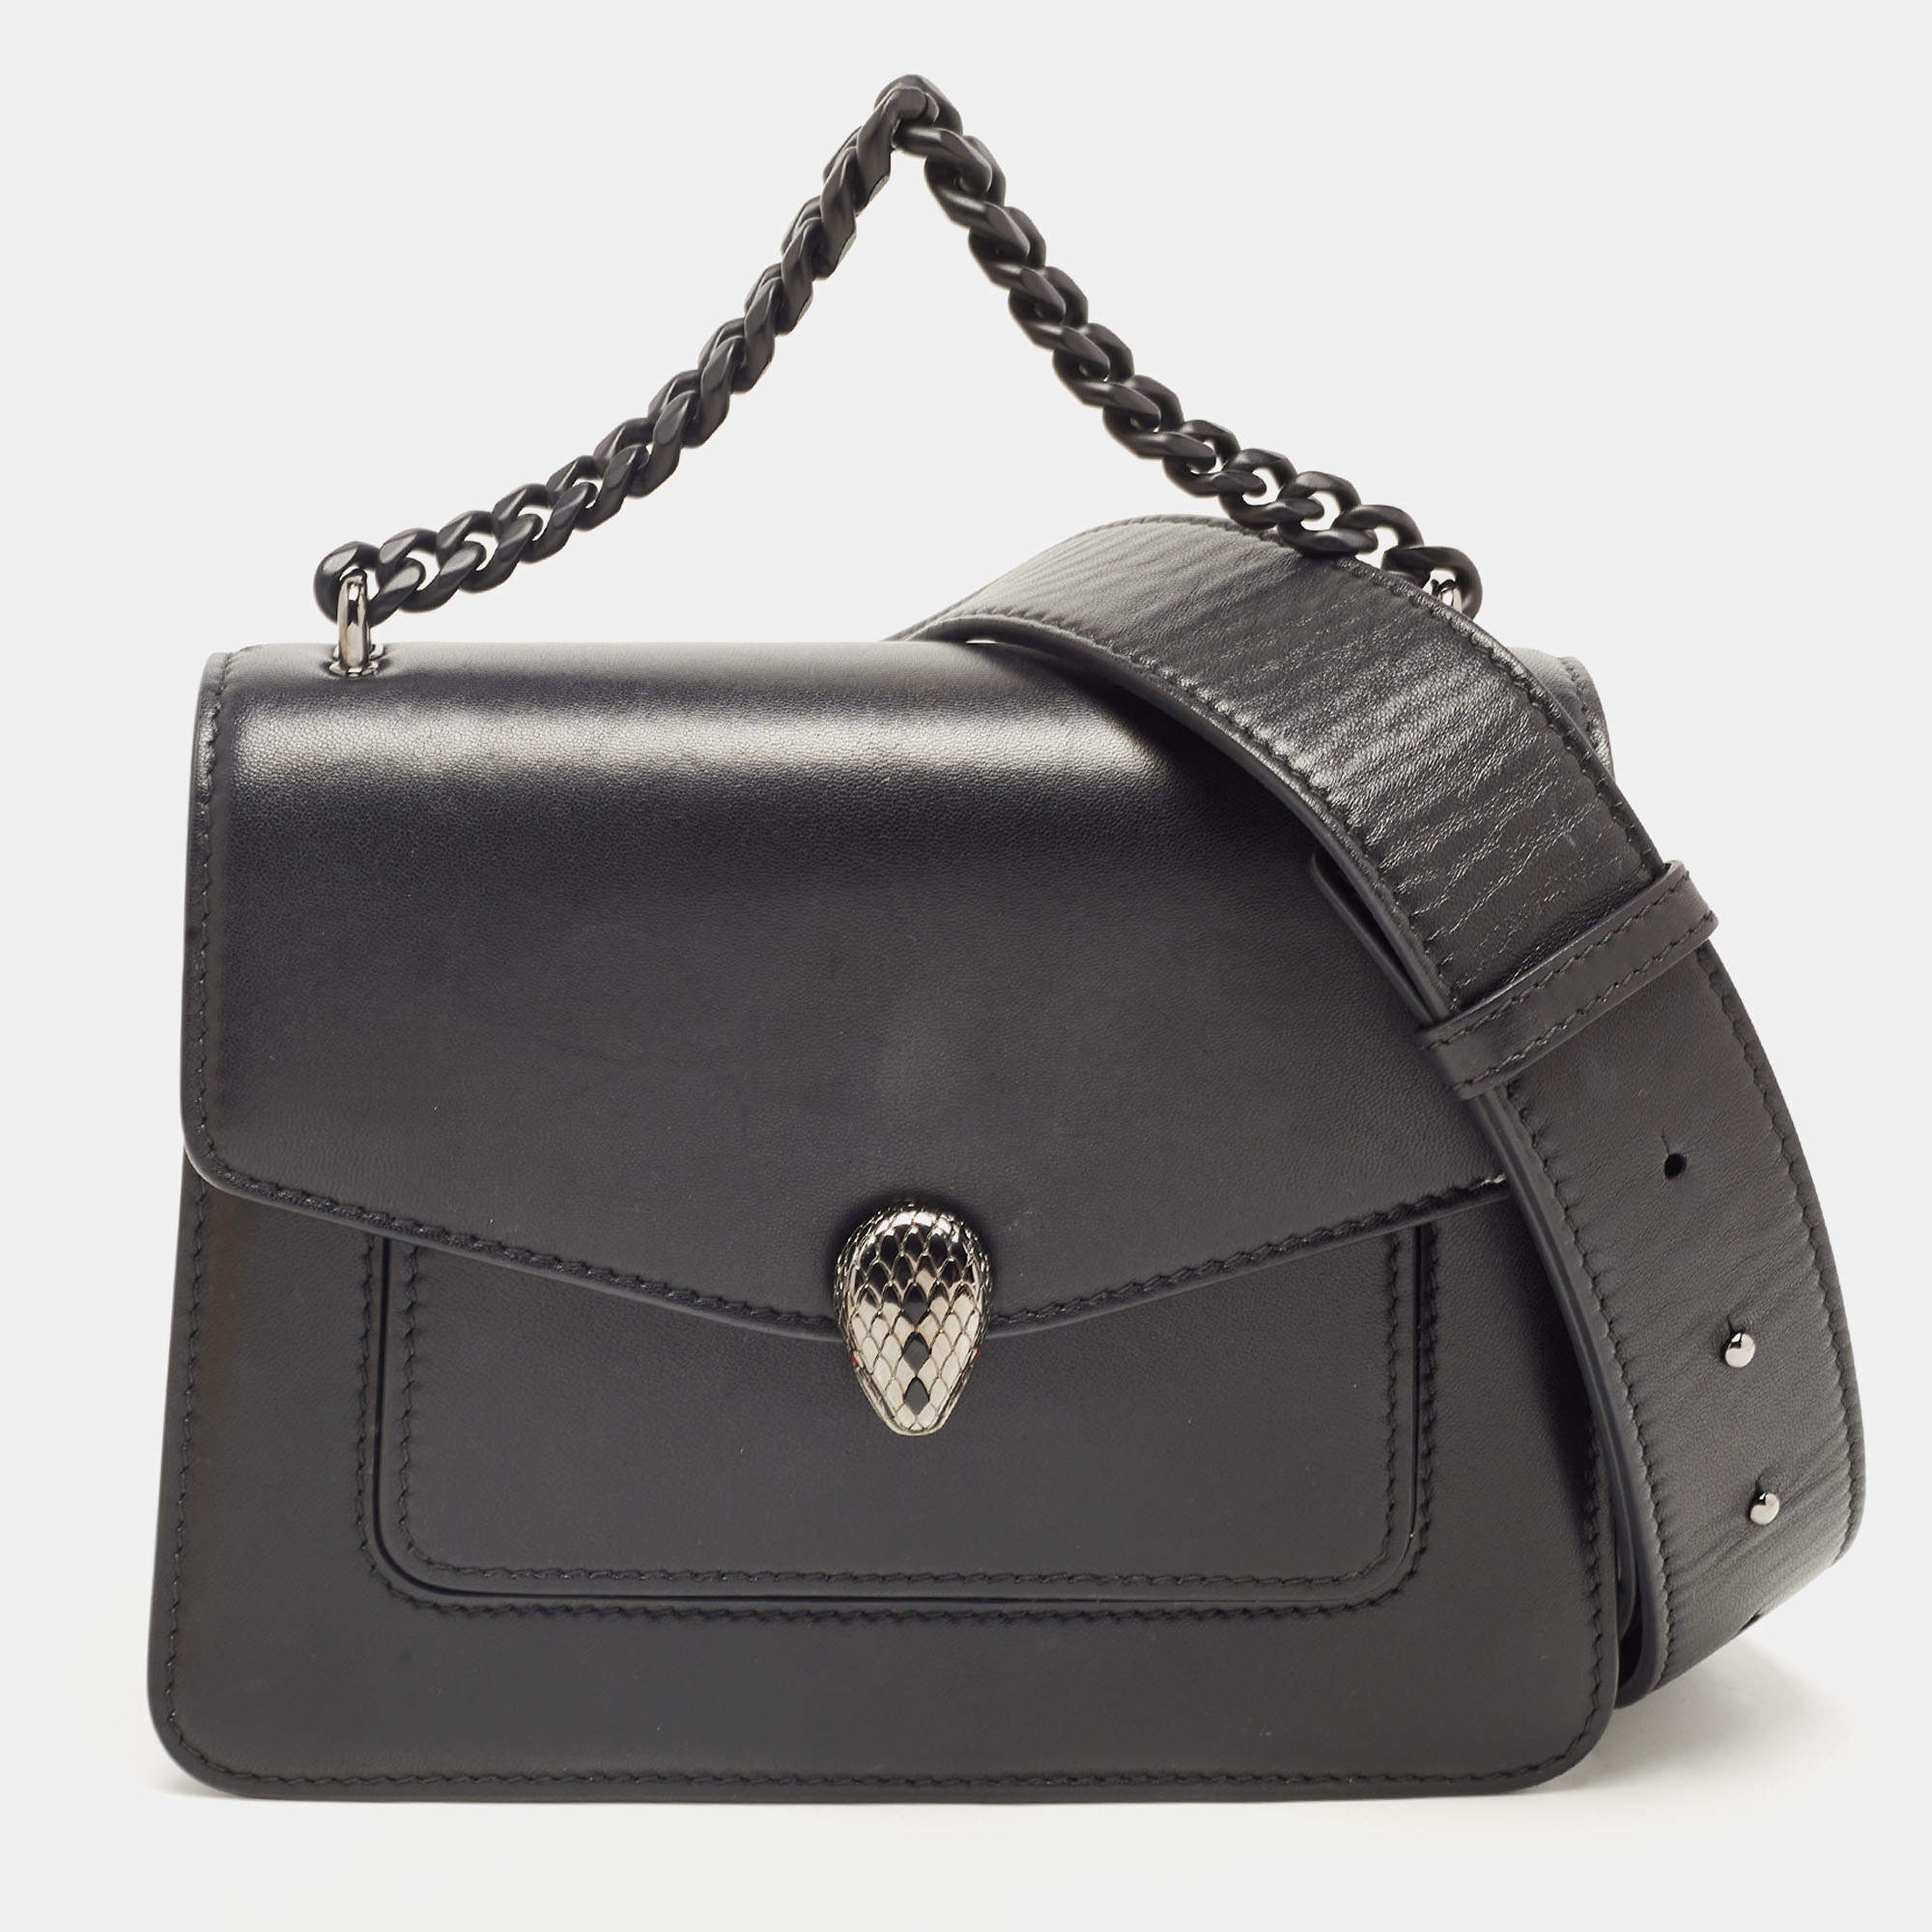 Authentic Bvlgari Serpenti Forever Shoulder Bag Leather - Black